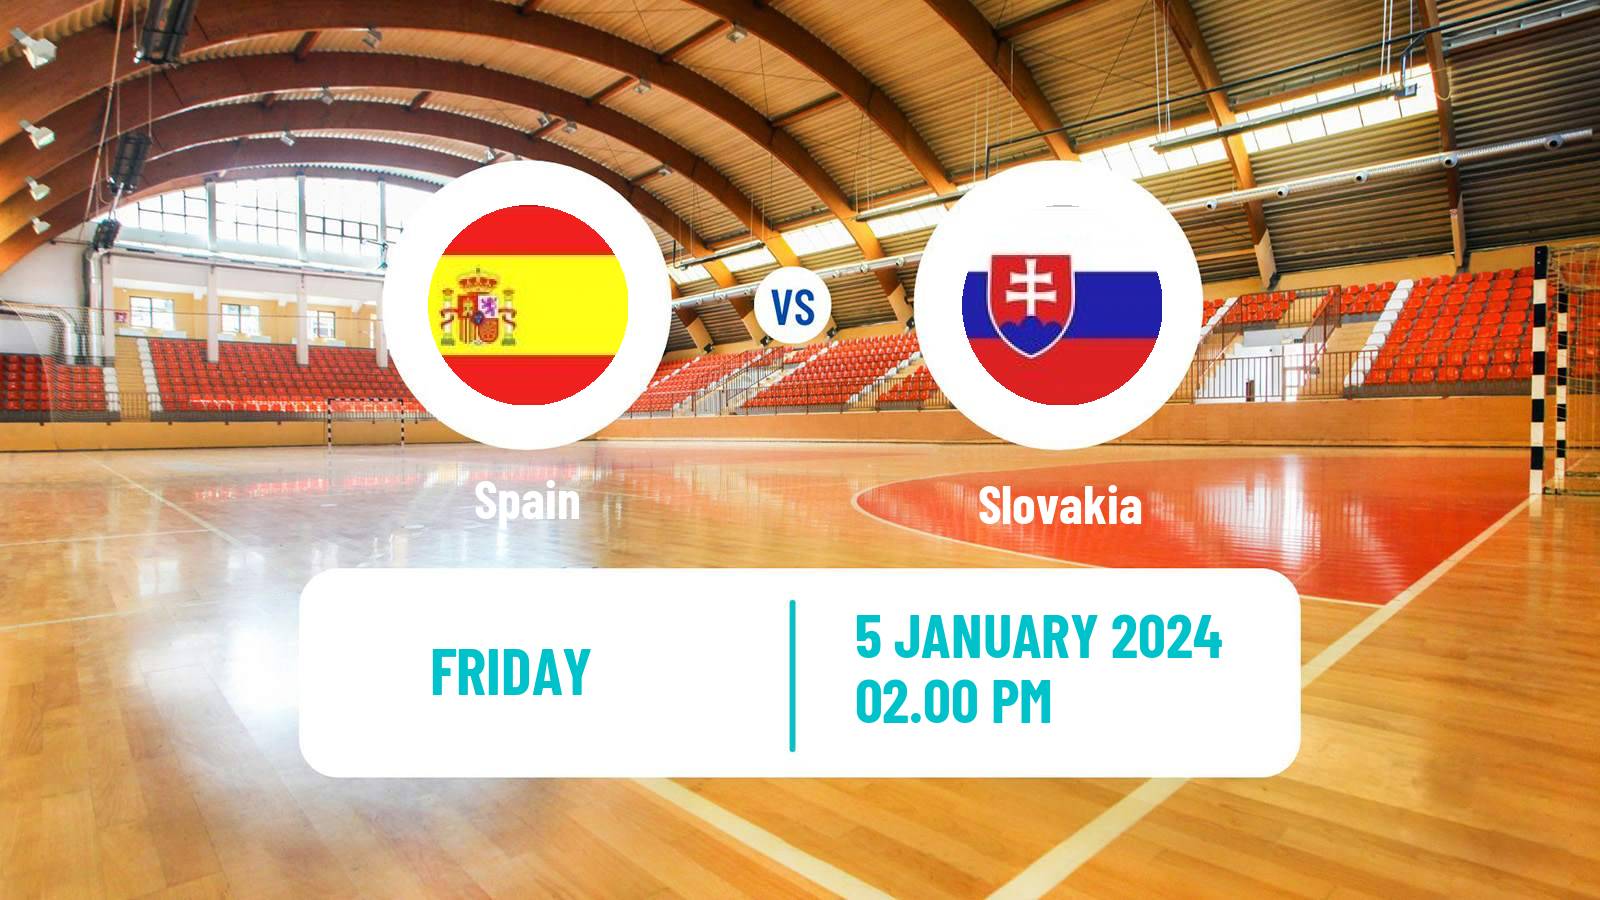 Handball Friendly International Handball Spain - Slovakia